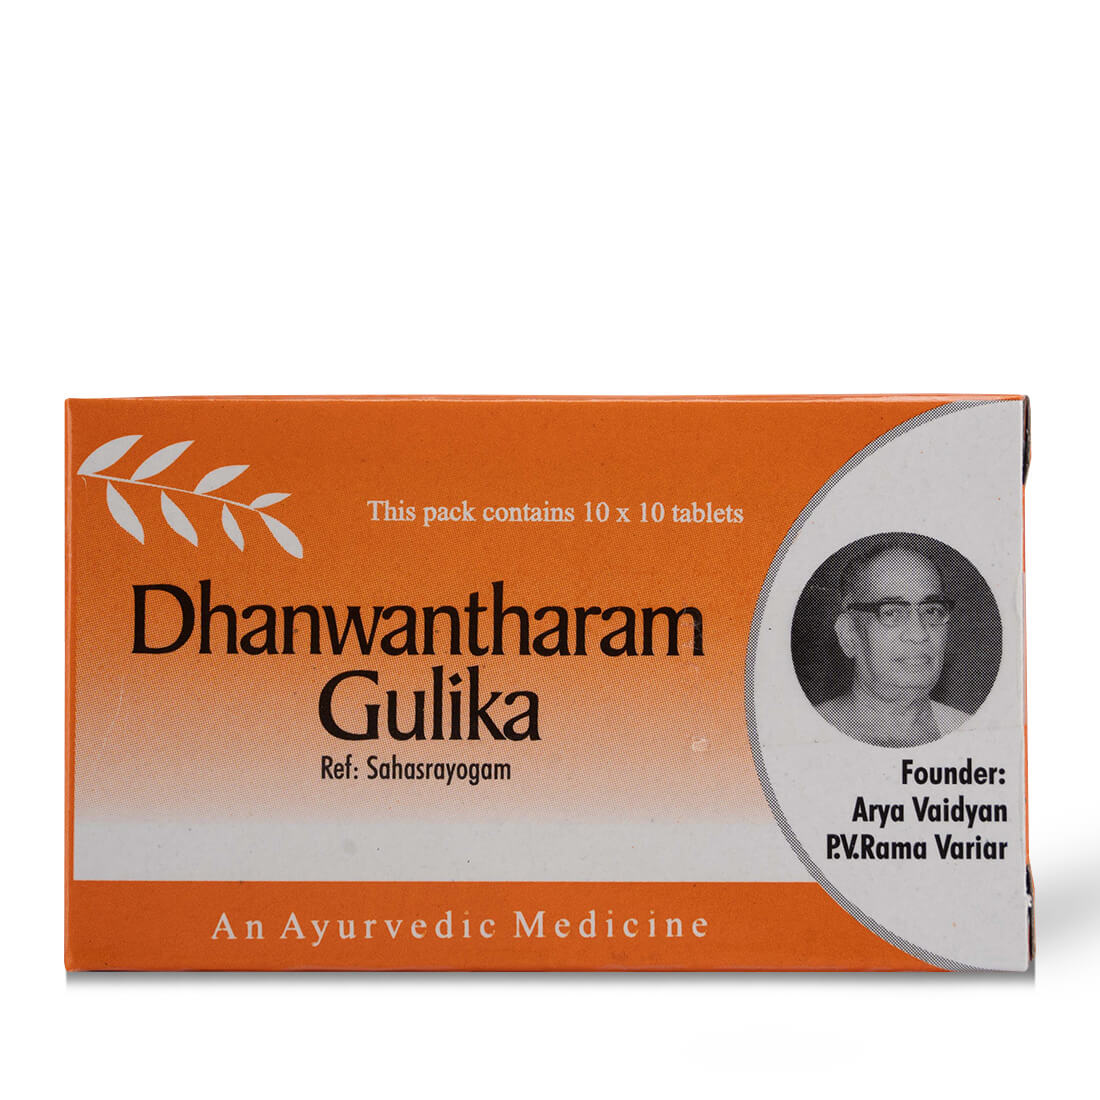 Dhanwantharam Gulika